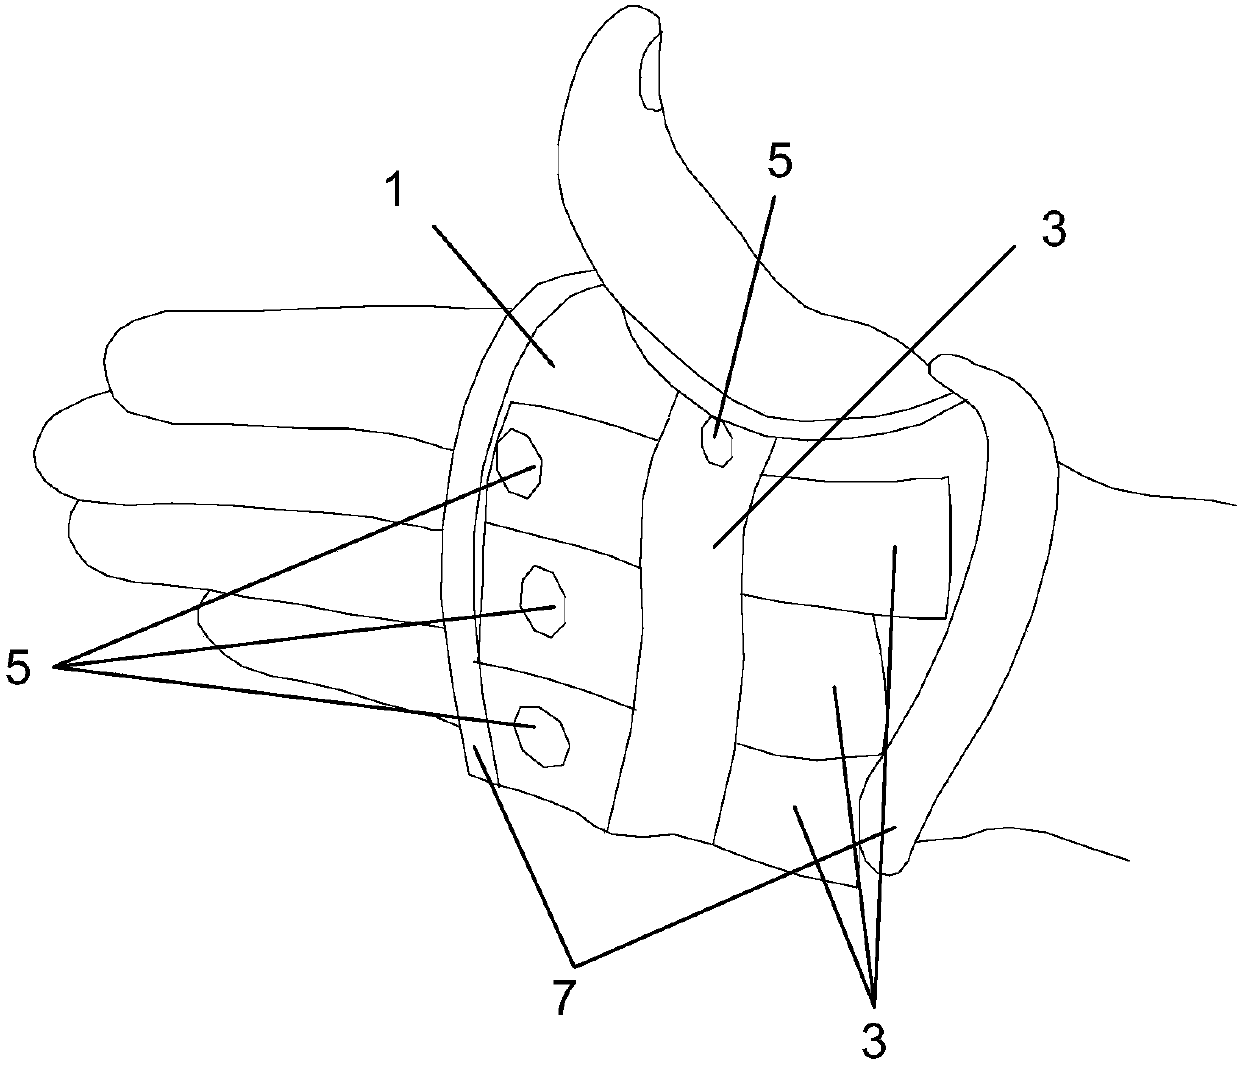 A palm type rehabilitation brace and its use method